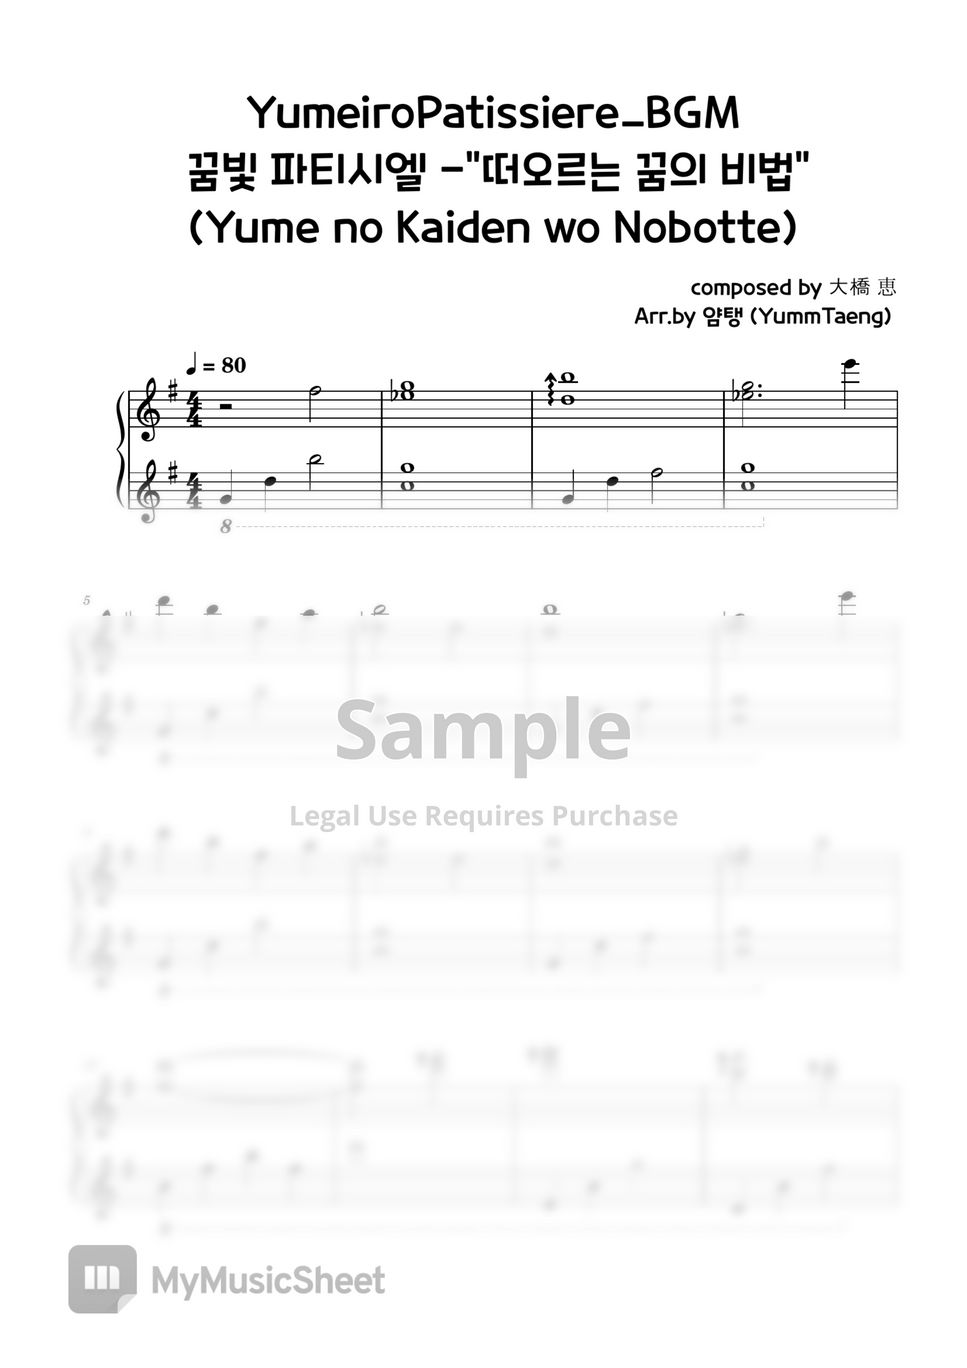 Yumeiro Patissiere - Yume no Kaiden wo Nobotte by YummTaeng